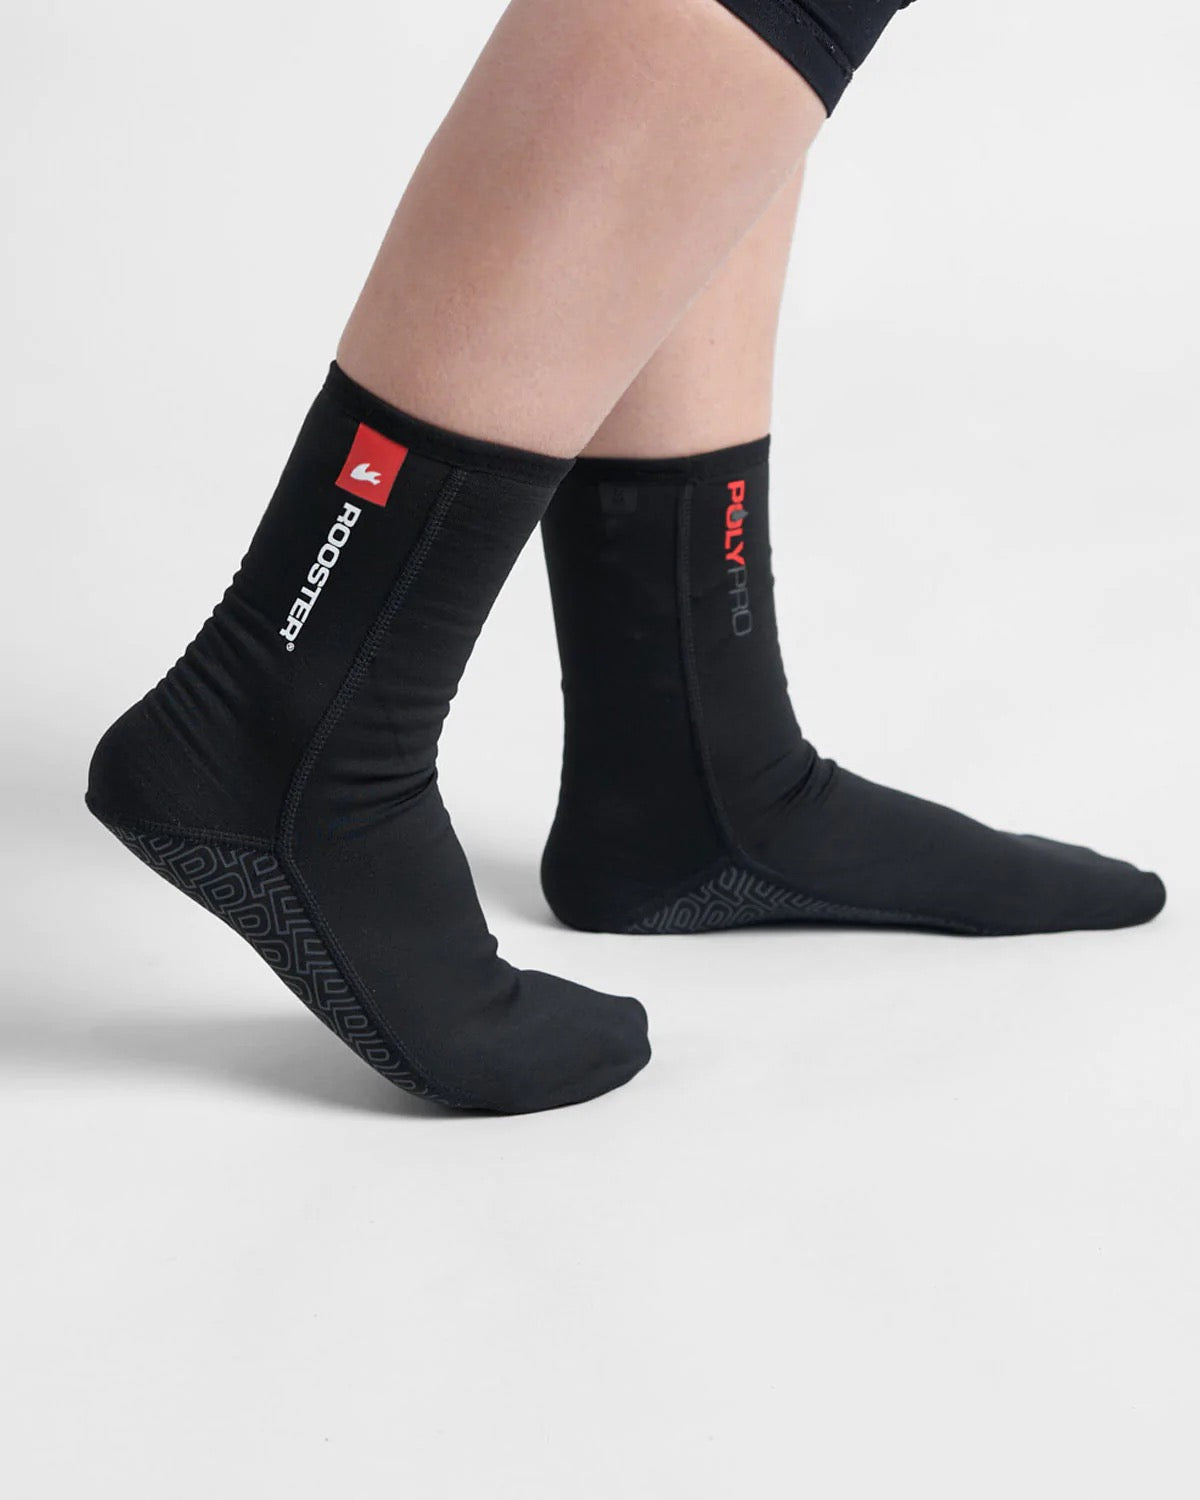 Polypro™ socks